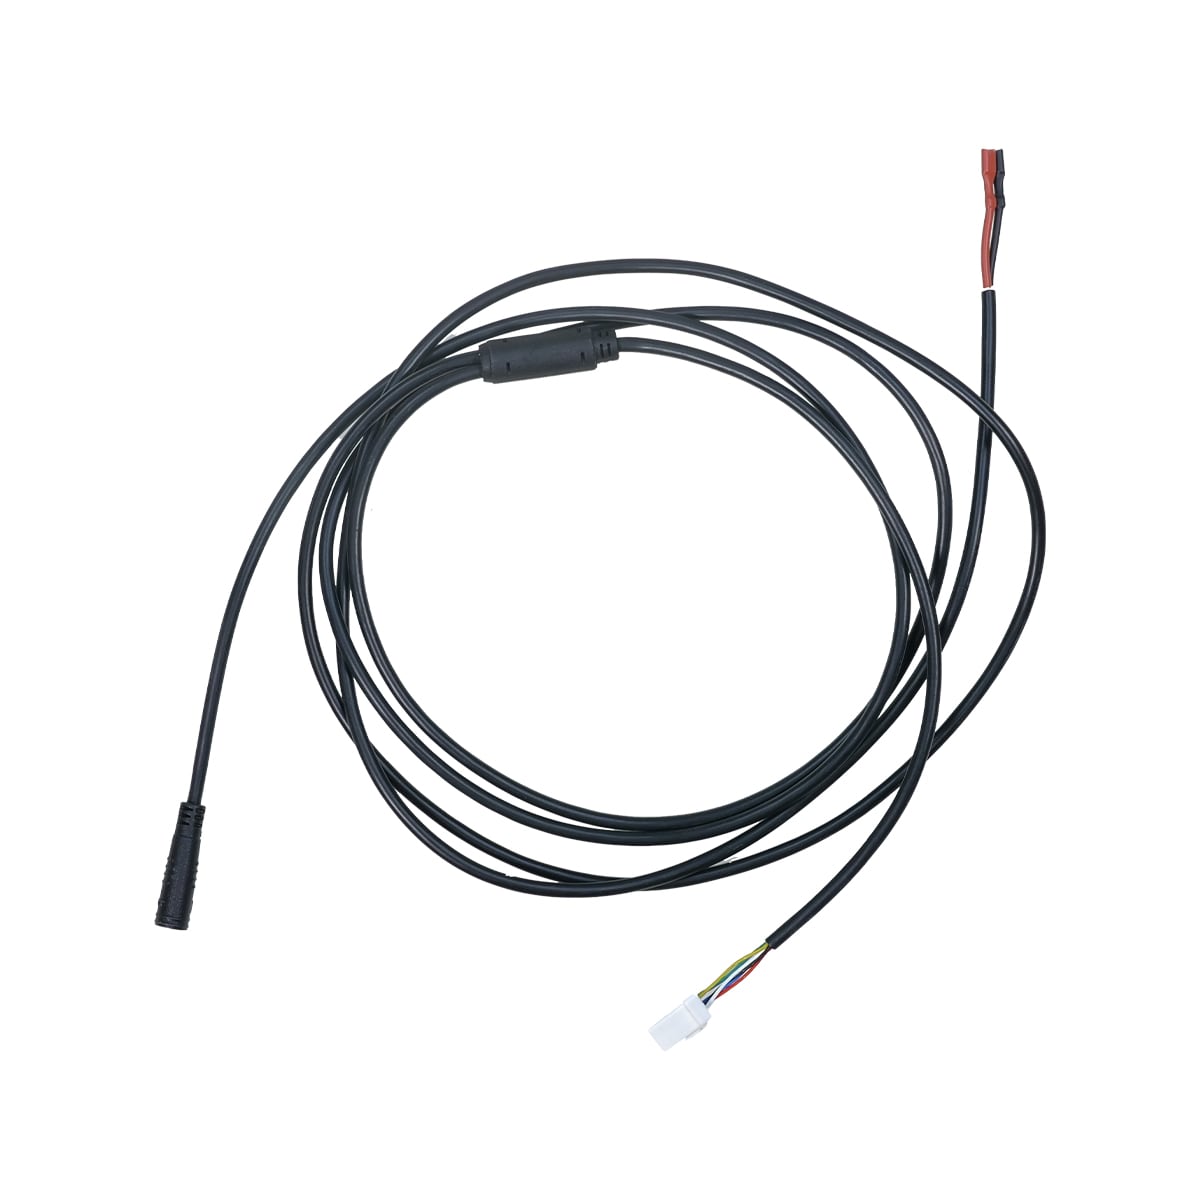 Kabel till LCD Display 2023 Sport-9 M81 1500 mm